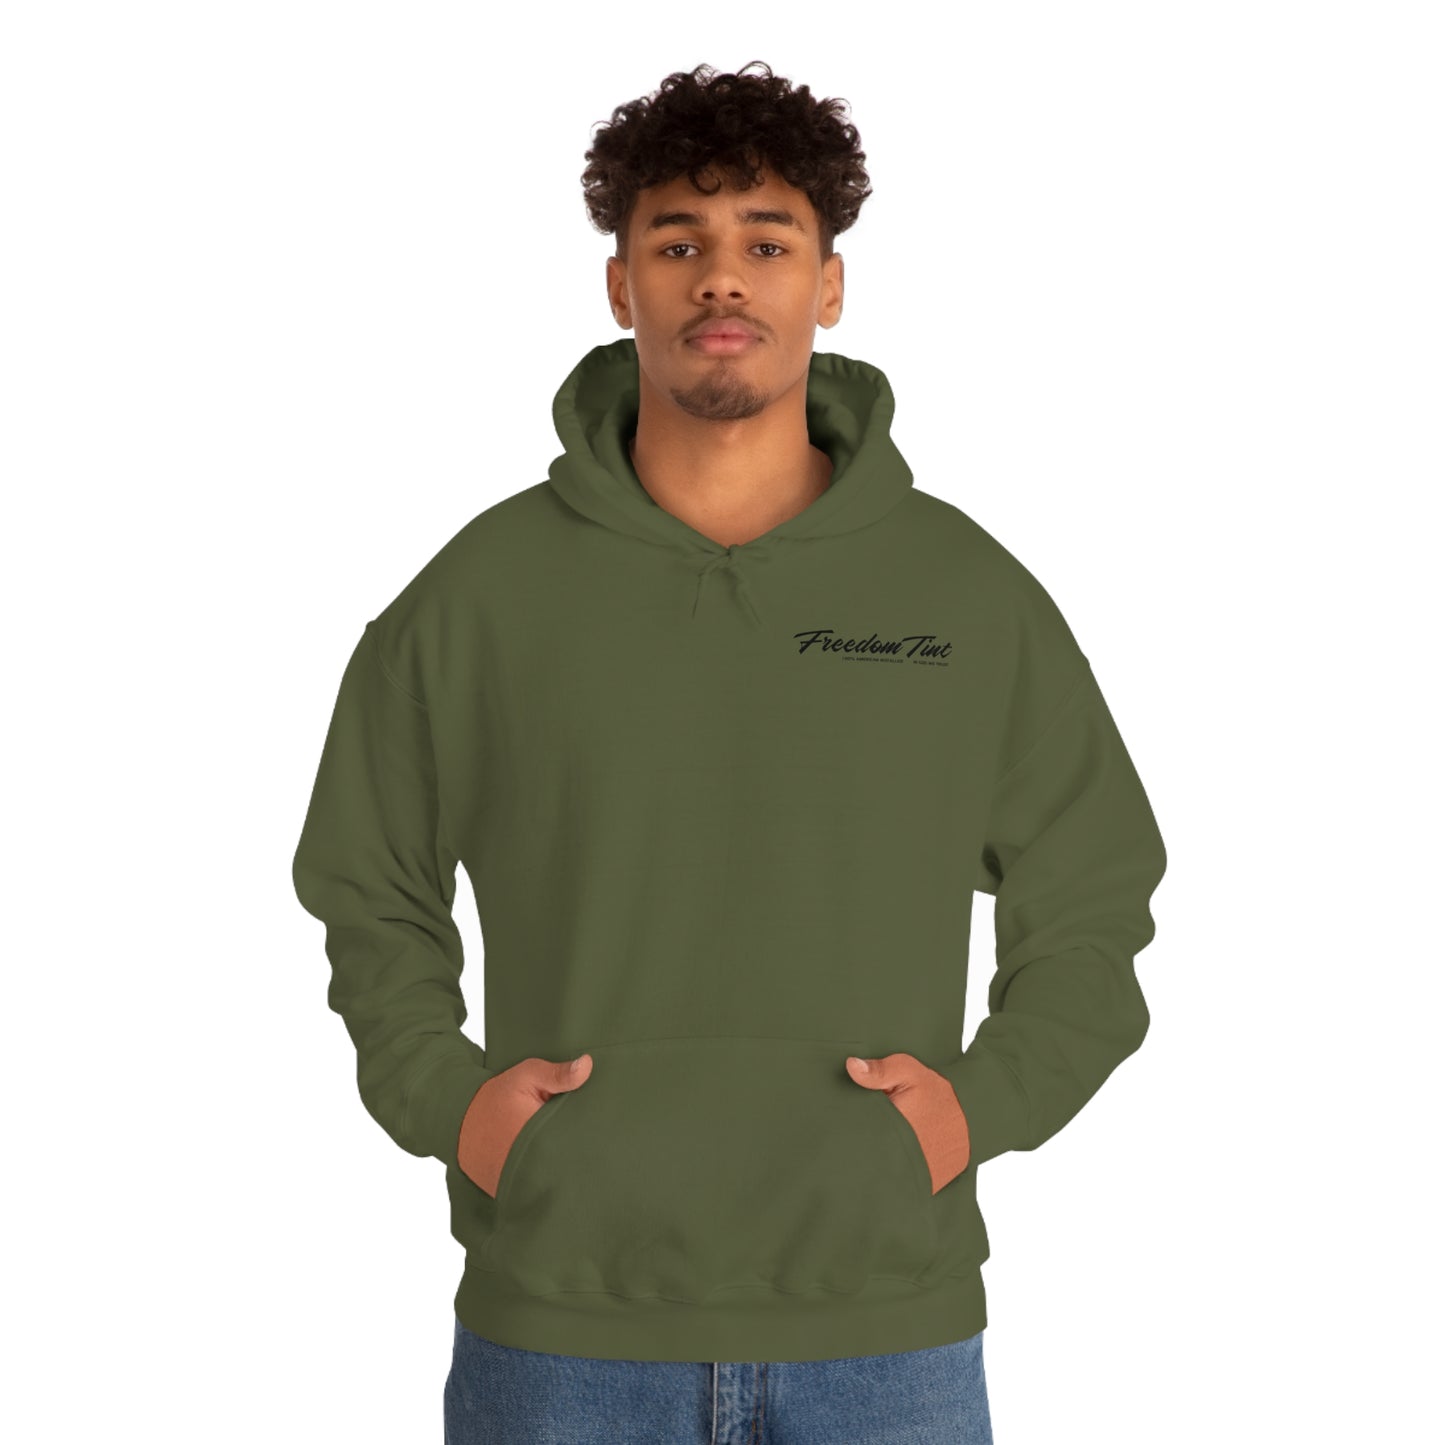 Freedom Tint 🇺🇸 Men's Heavy Blend™ Hooded Sweatshirt